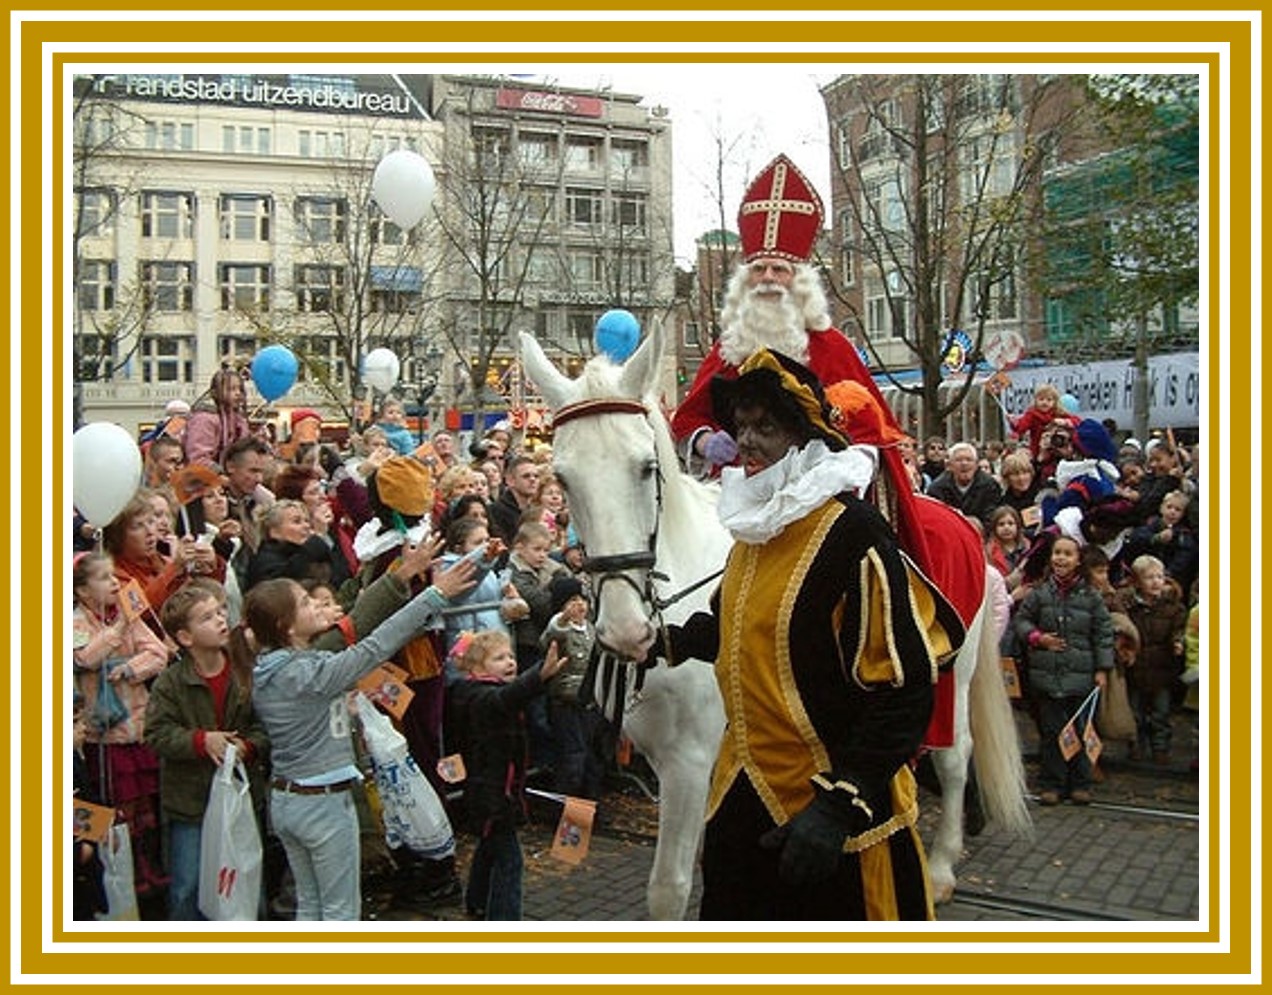 Sinterklaas takes part in a Christmas parade while riding a horse. | OrnamentShop.com